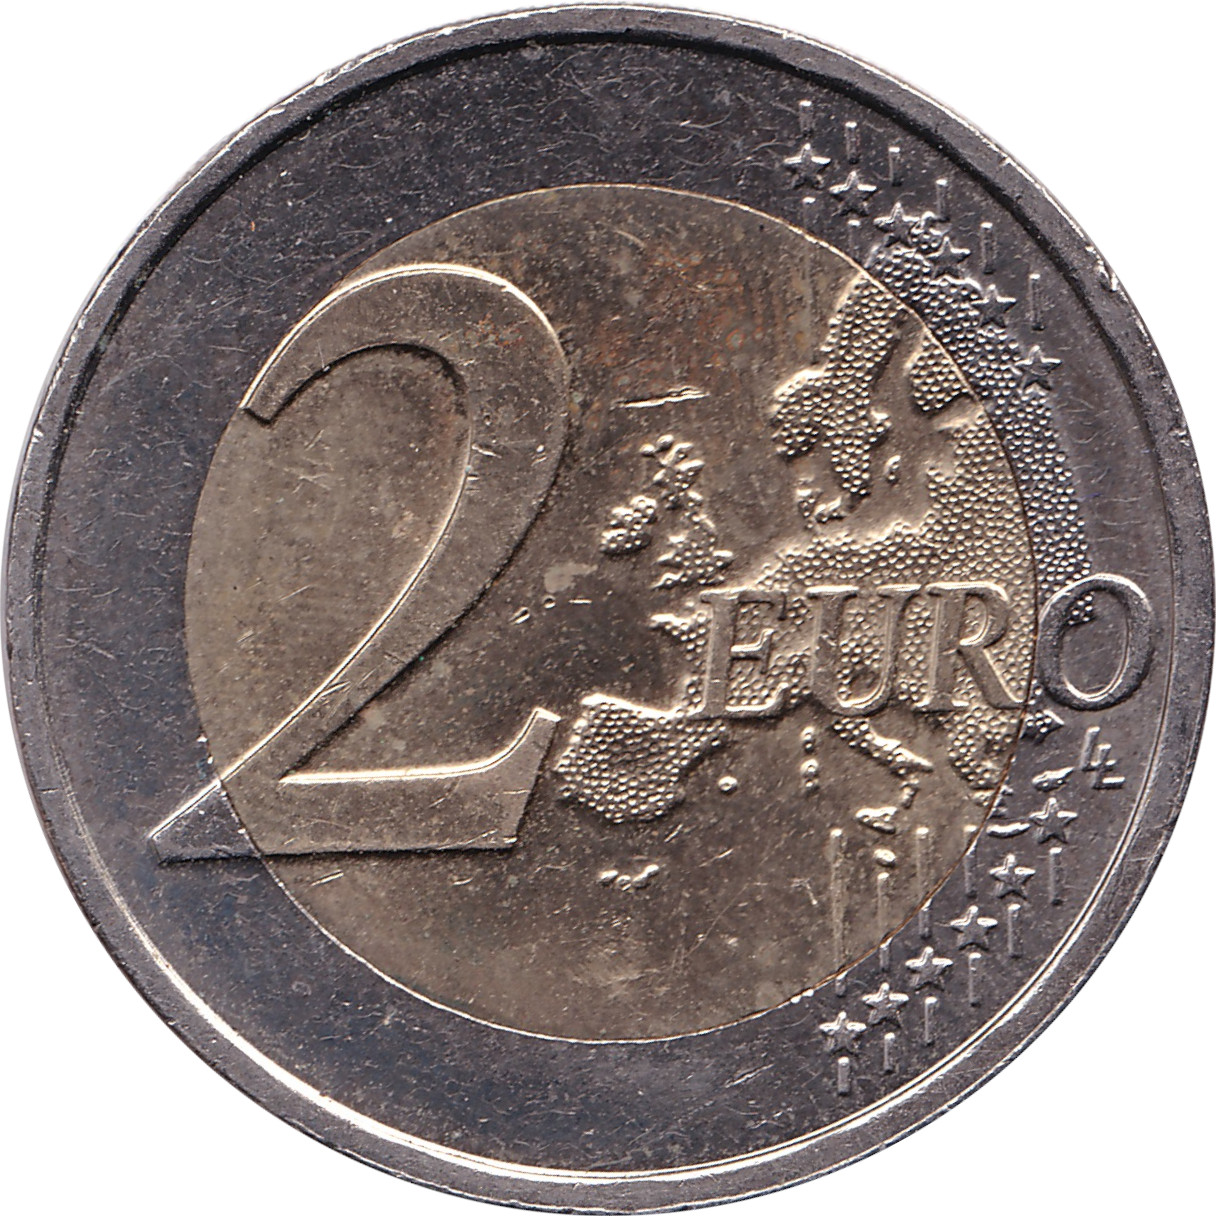 2 euro - Paix en Europe - 70 ans